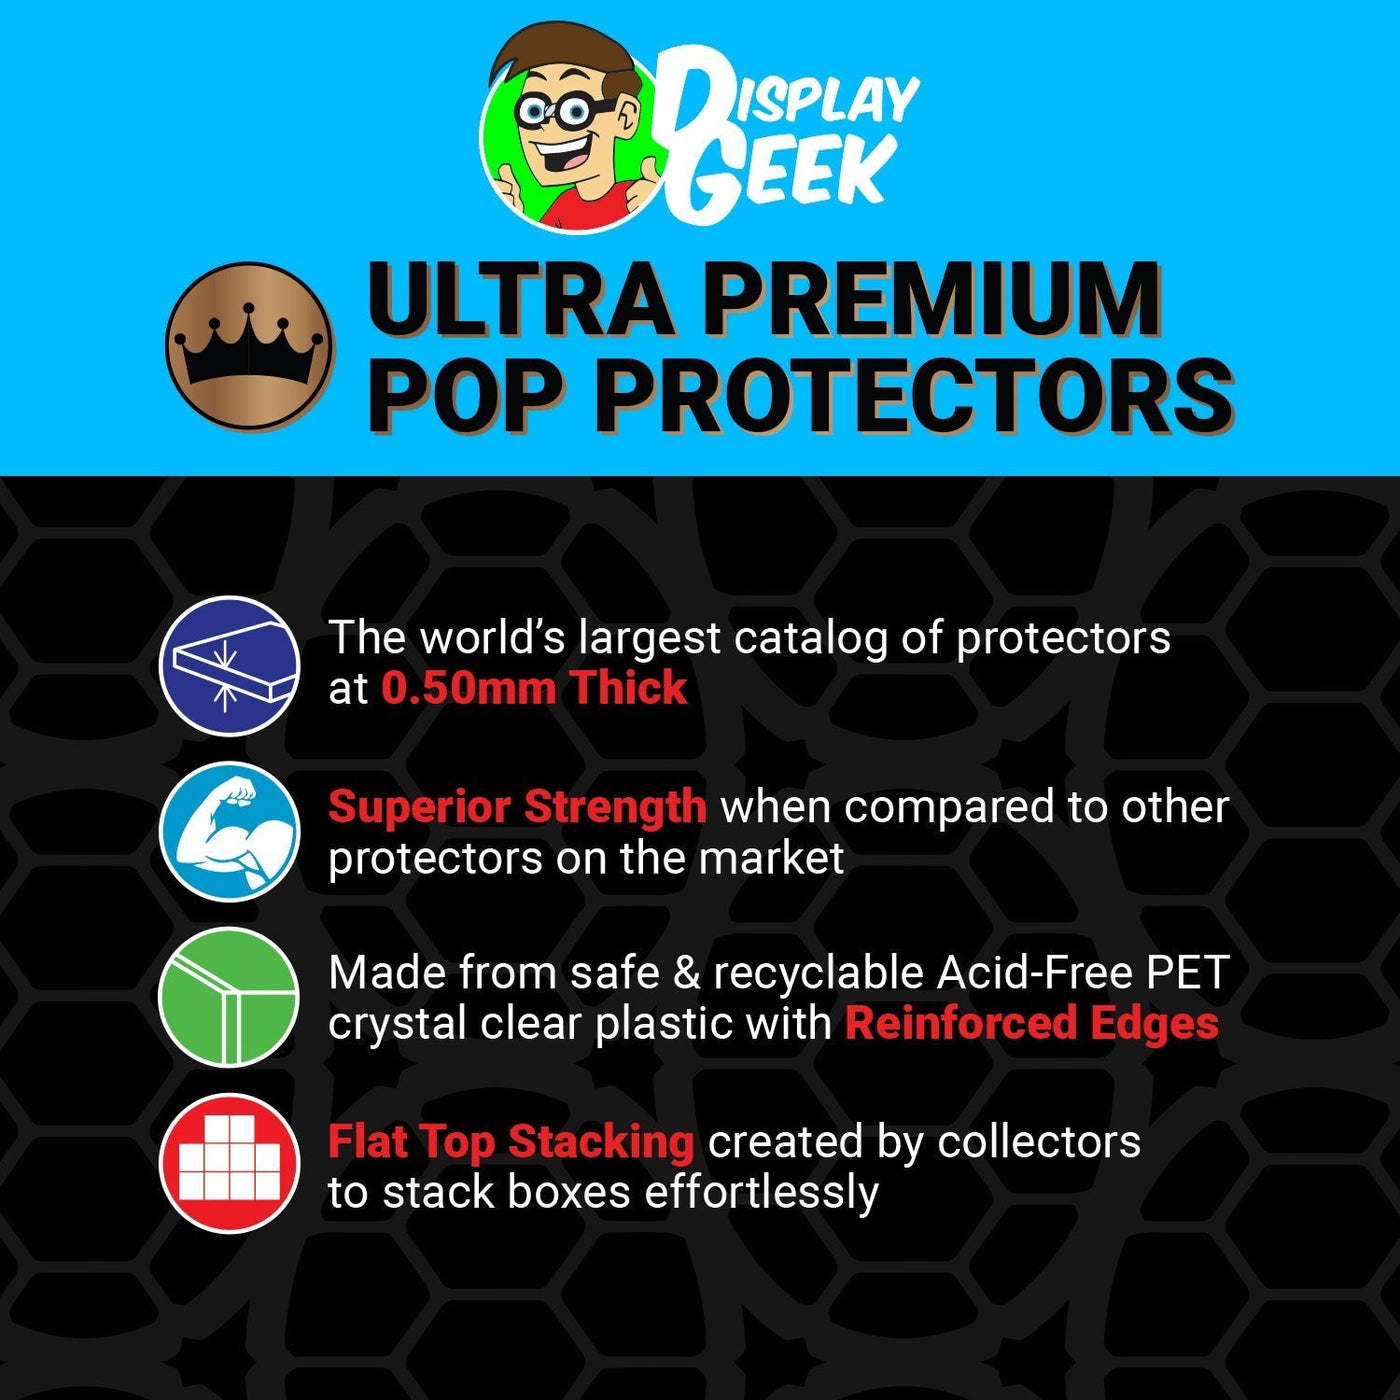 Pop Protector for 5 Pack Darth Vader, Stormtrooper, Luke Skywalker, Princess Leia & Chewbacca Funko Pop on The Protector Guide App by Display Geek